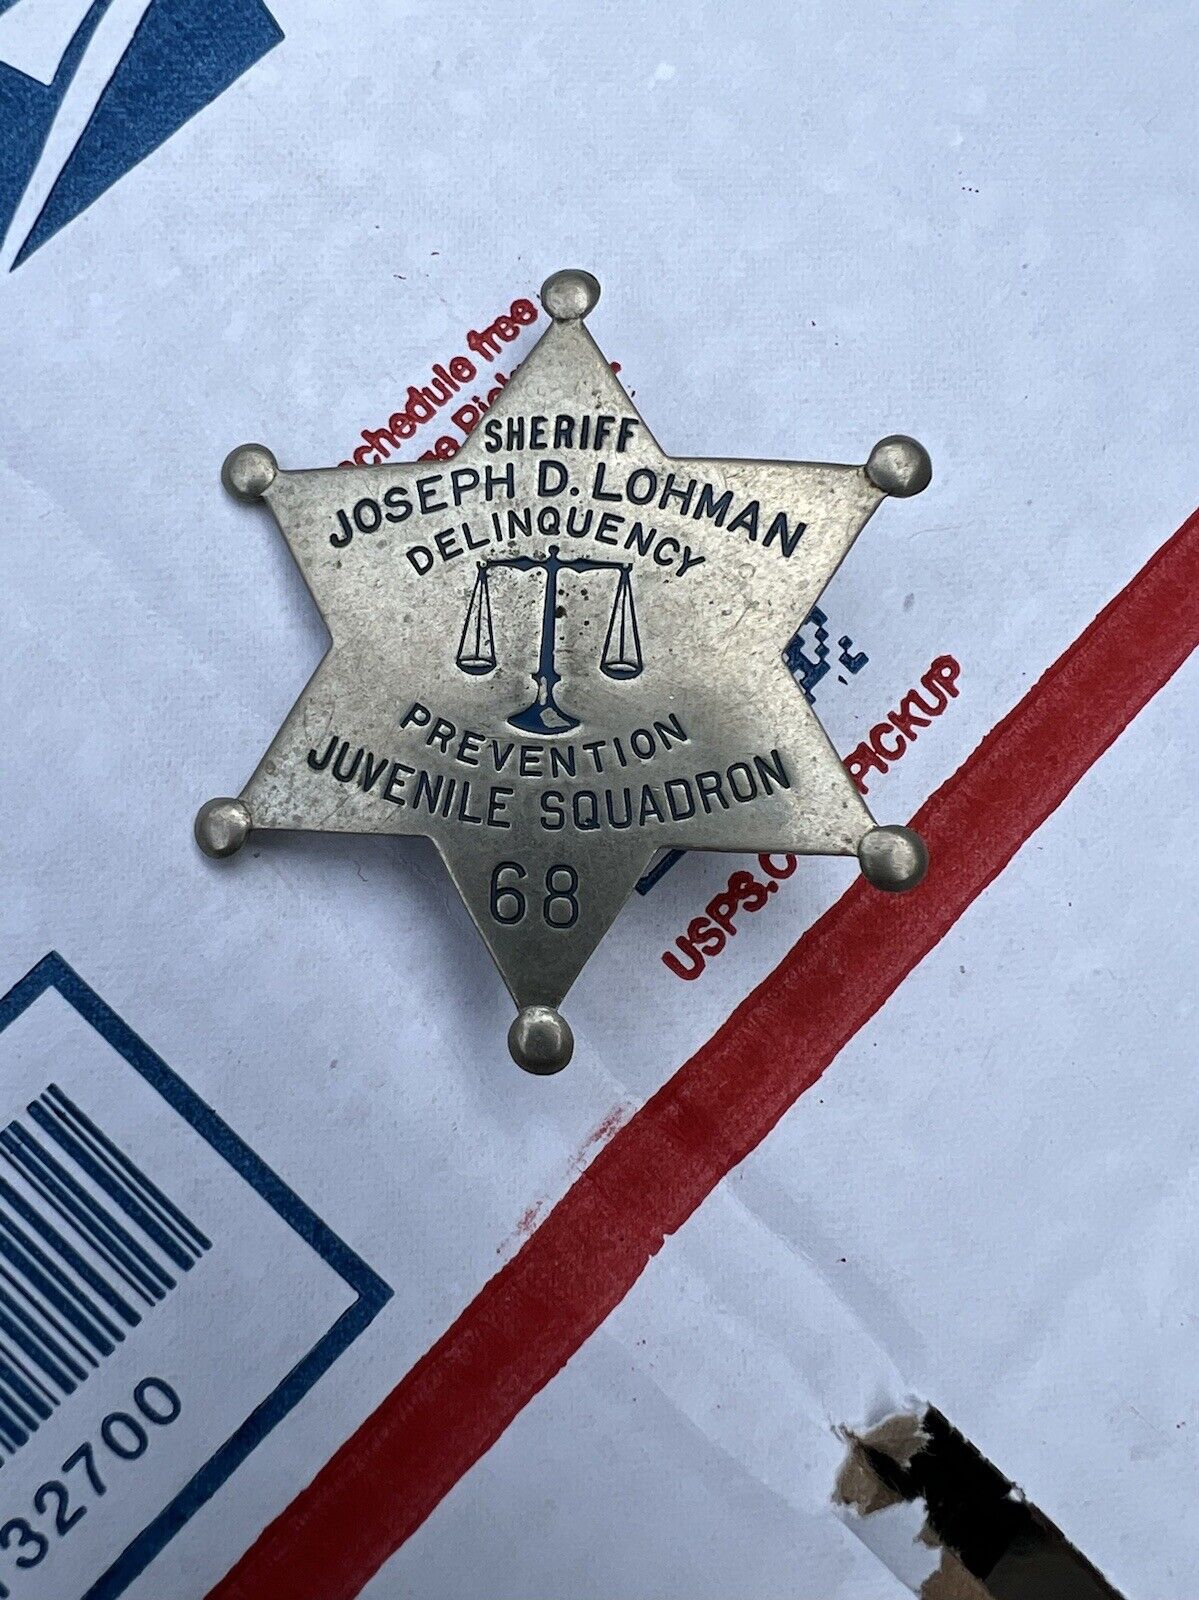 Vintage obsolete Sheriff Joseph D Lohman Delinquency Prevention Star Badge